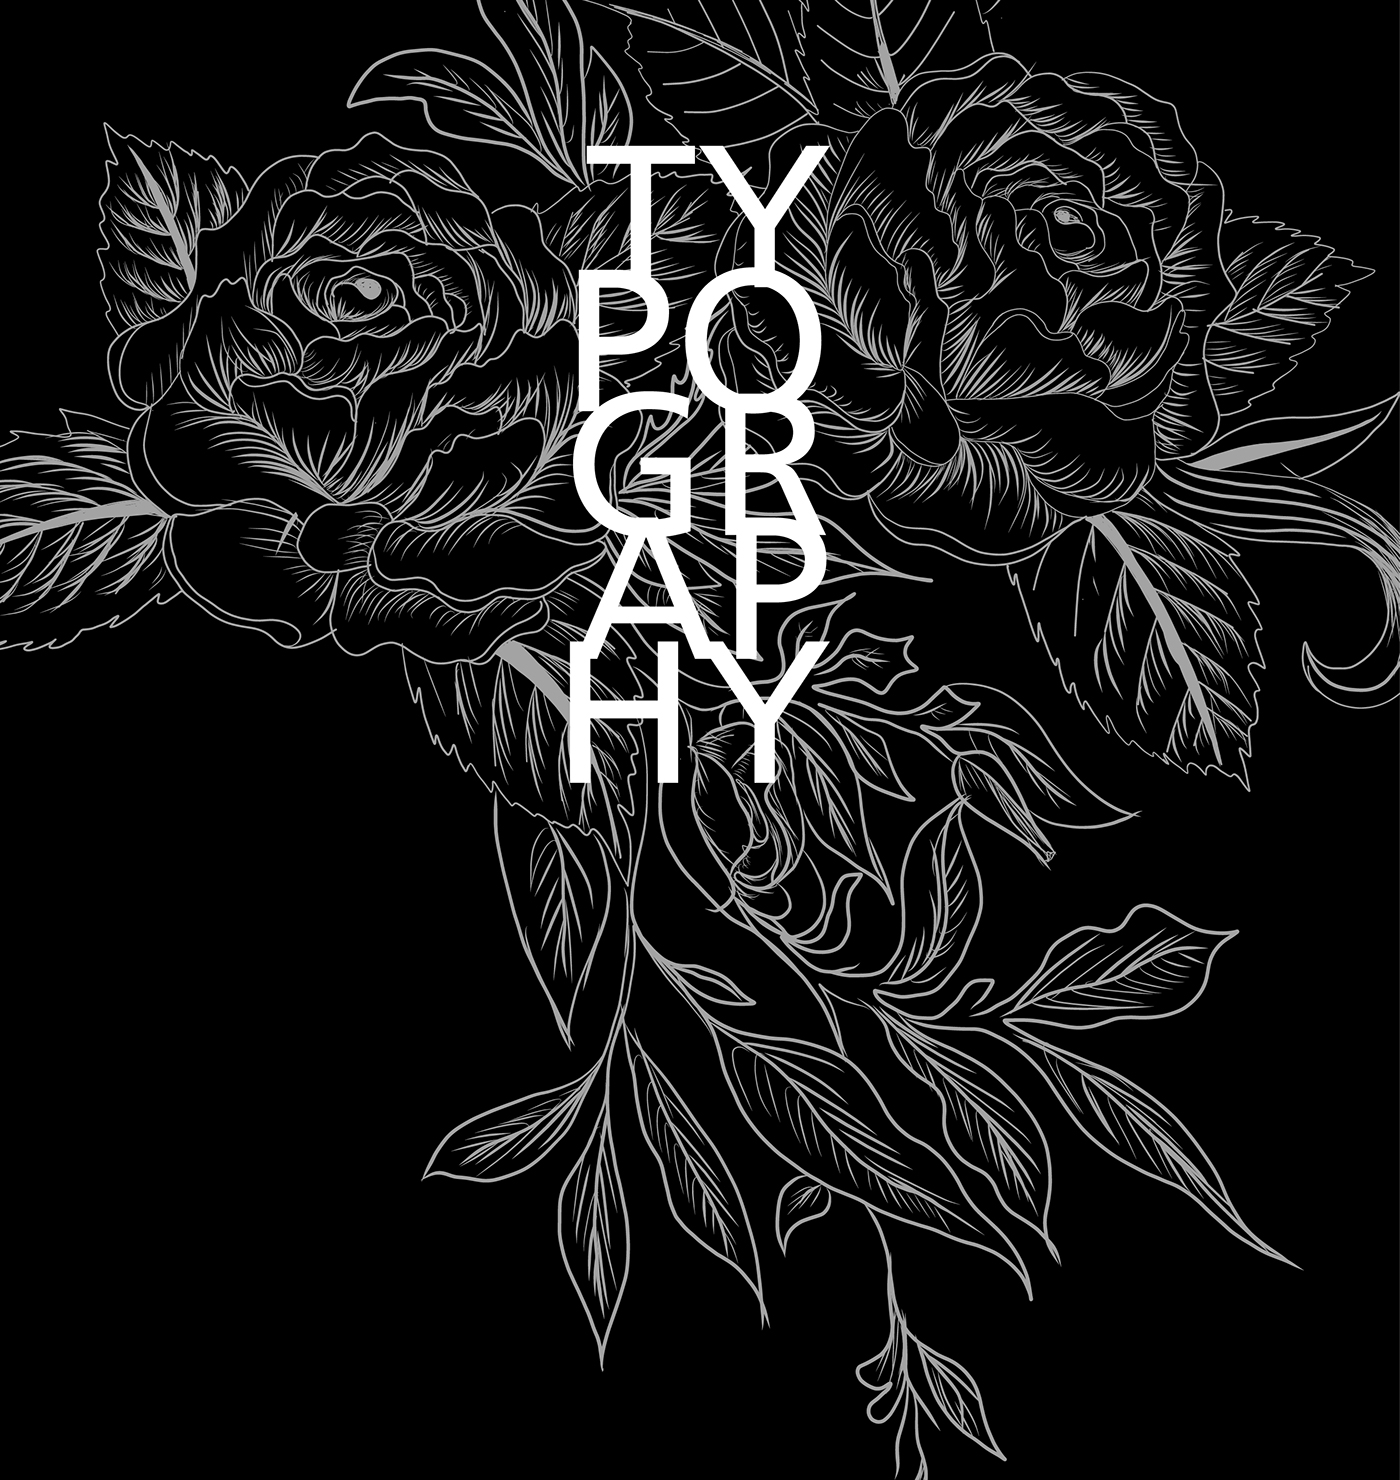 Typography - Artwork on Behance